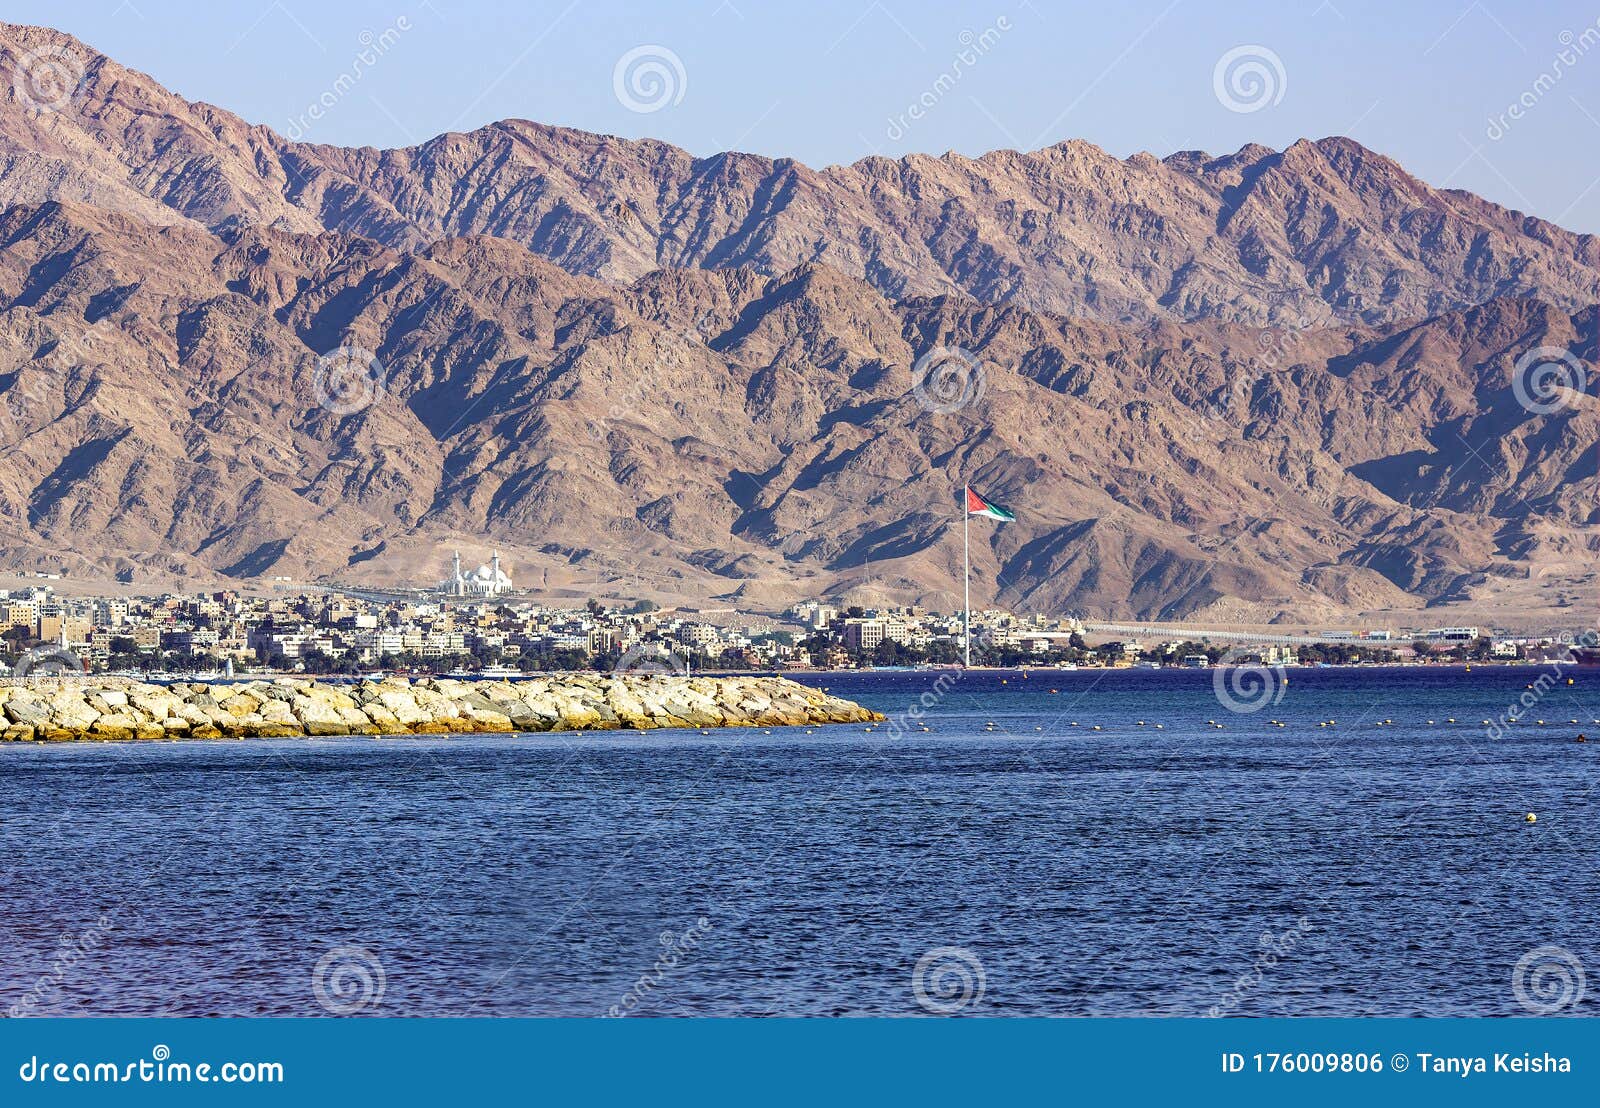 Edom Mountains of Jordan on the Red Sea Coastline Stock Photo - Image of israel, shoreline: